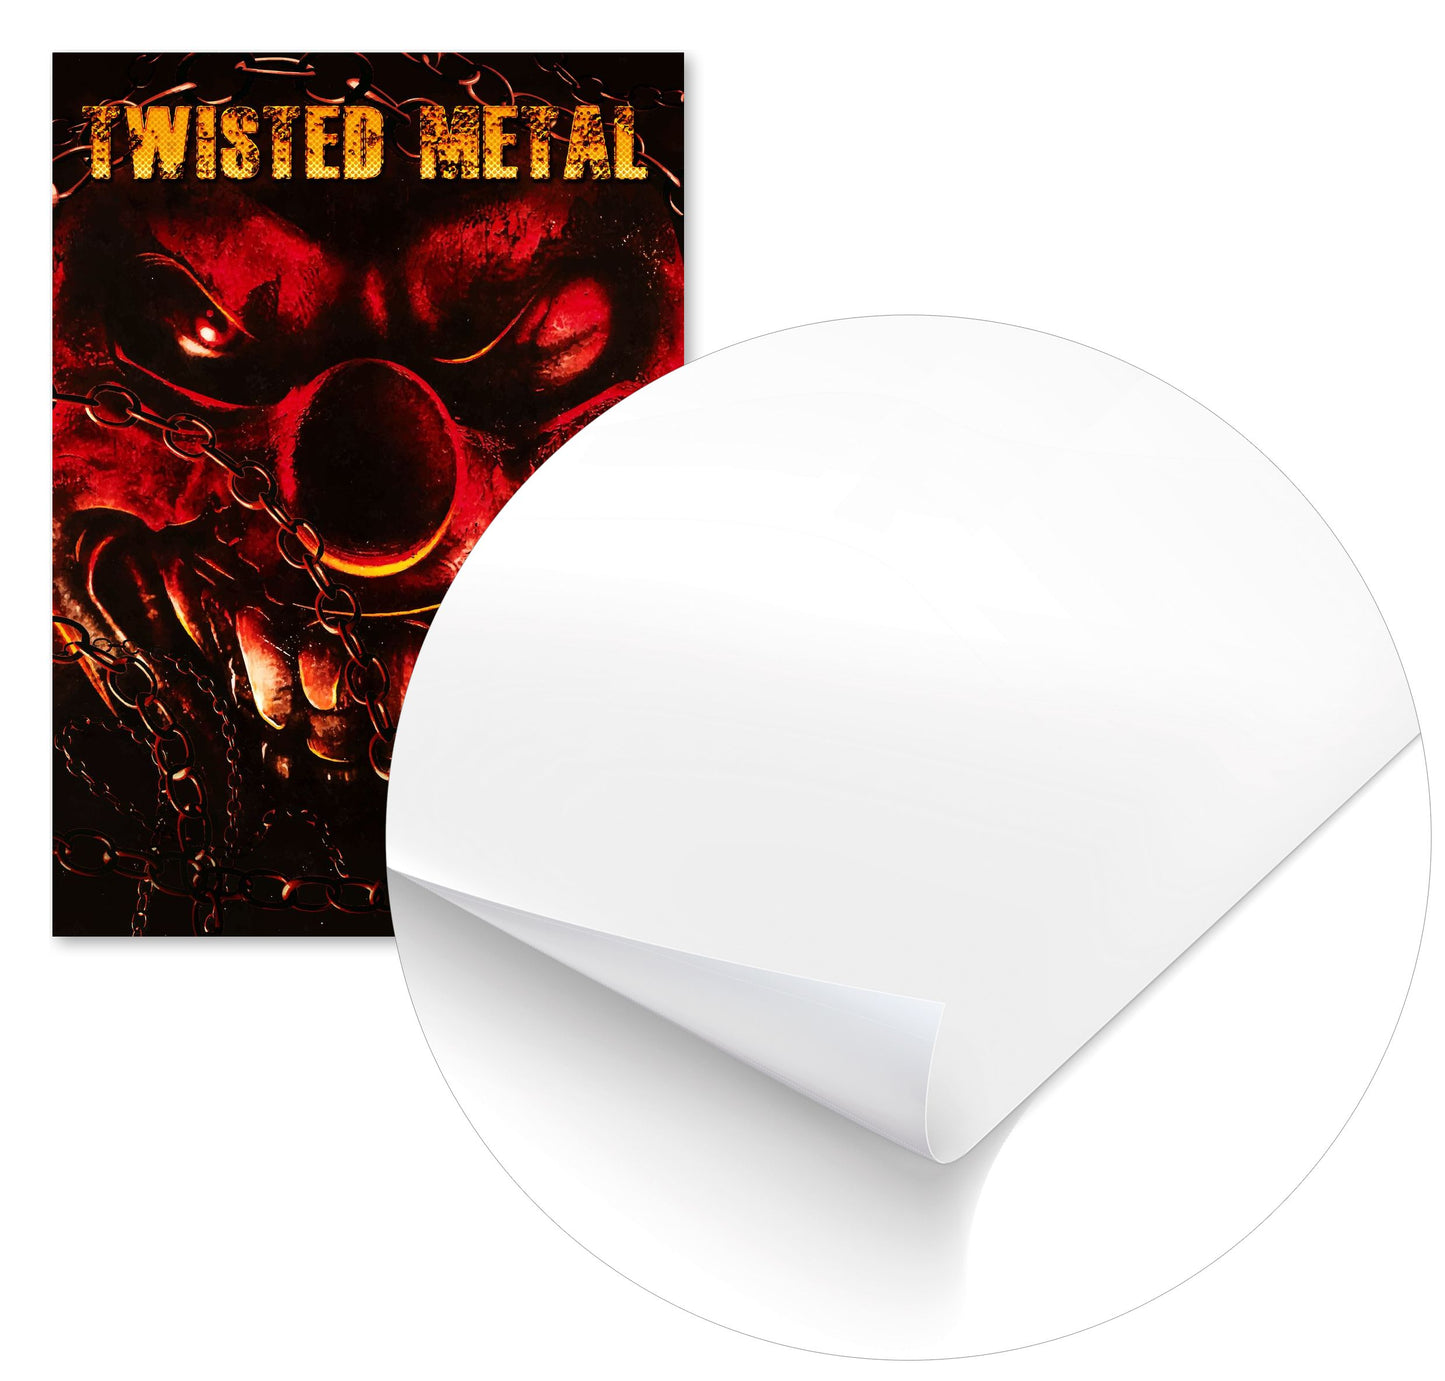 Twisted Metal ultimate - @SyanArt